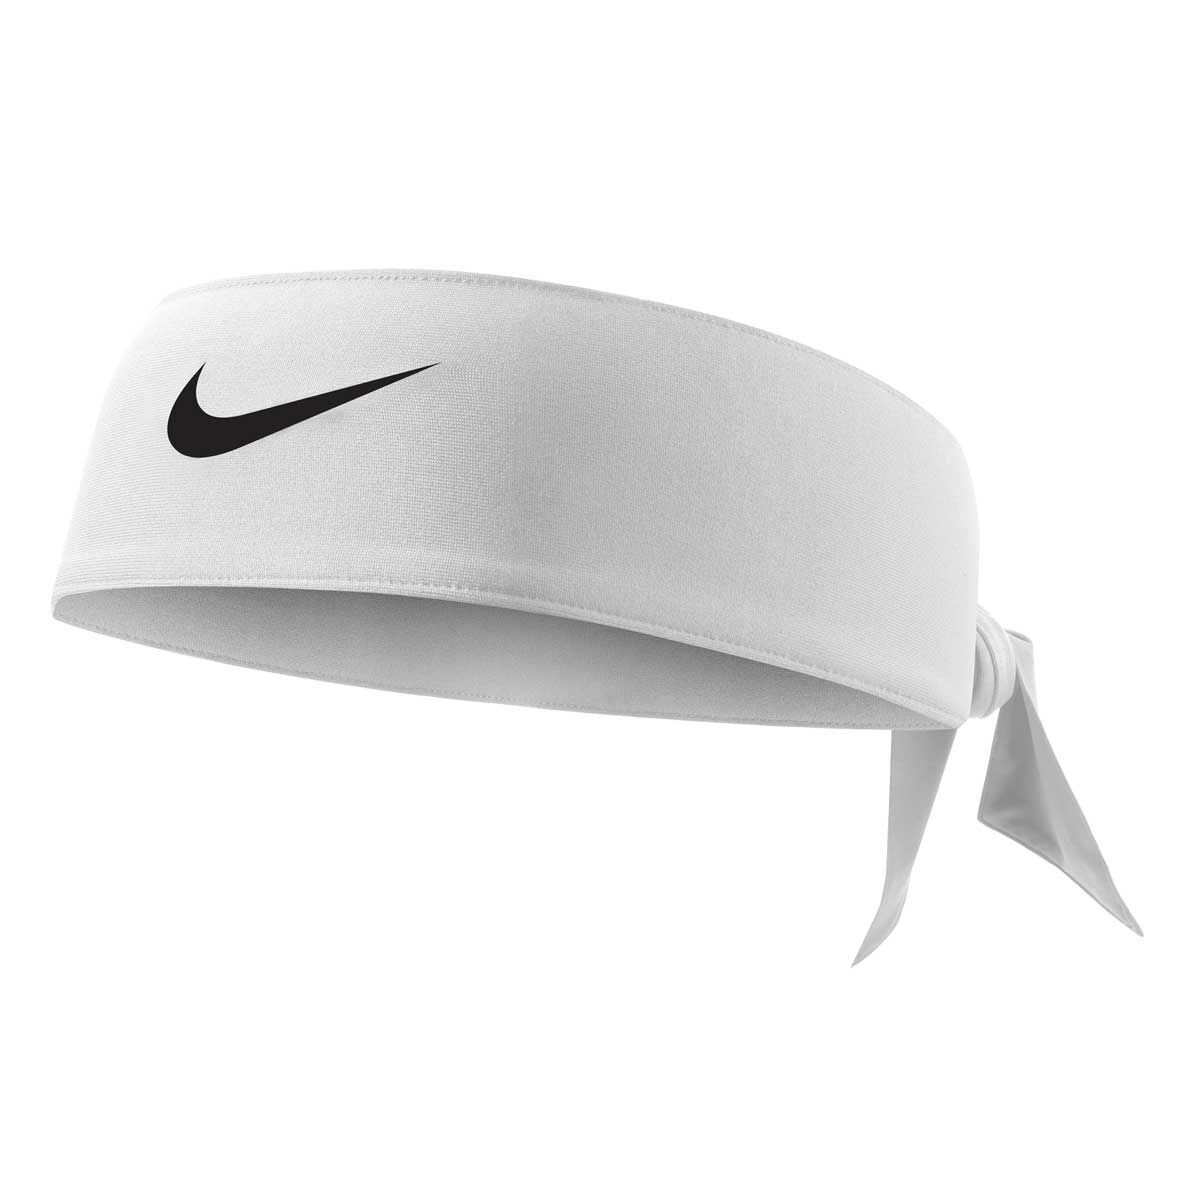 rebel sport headband